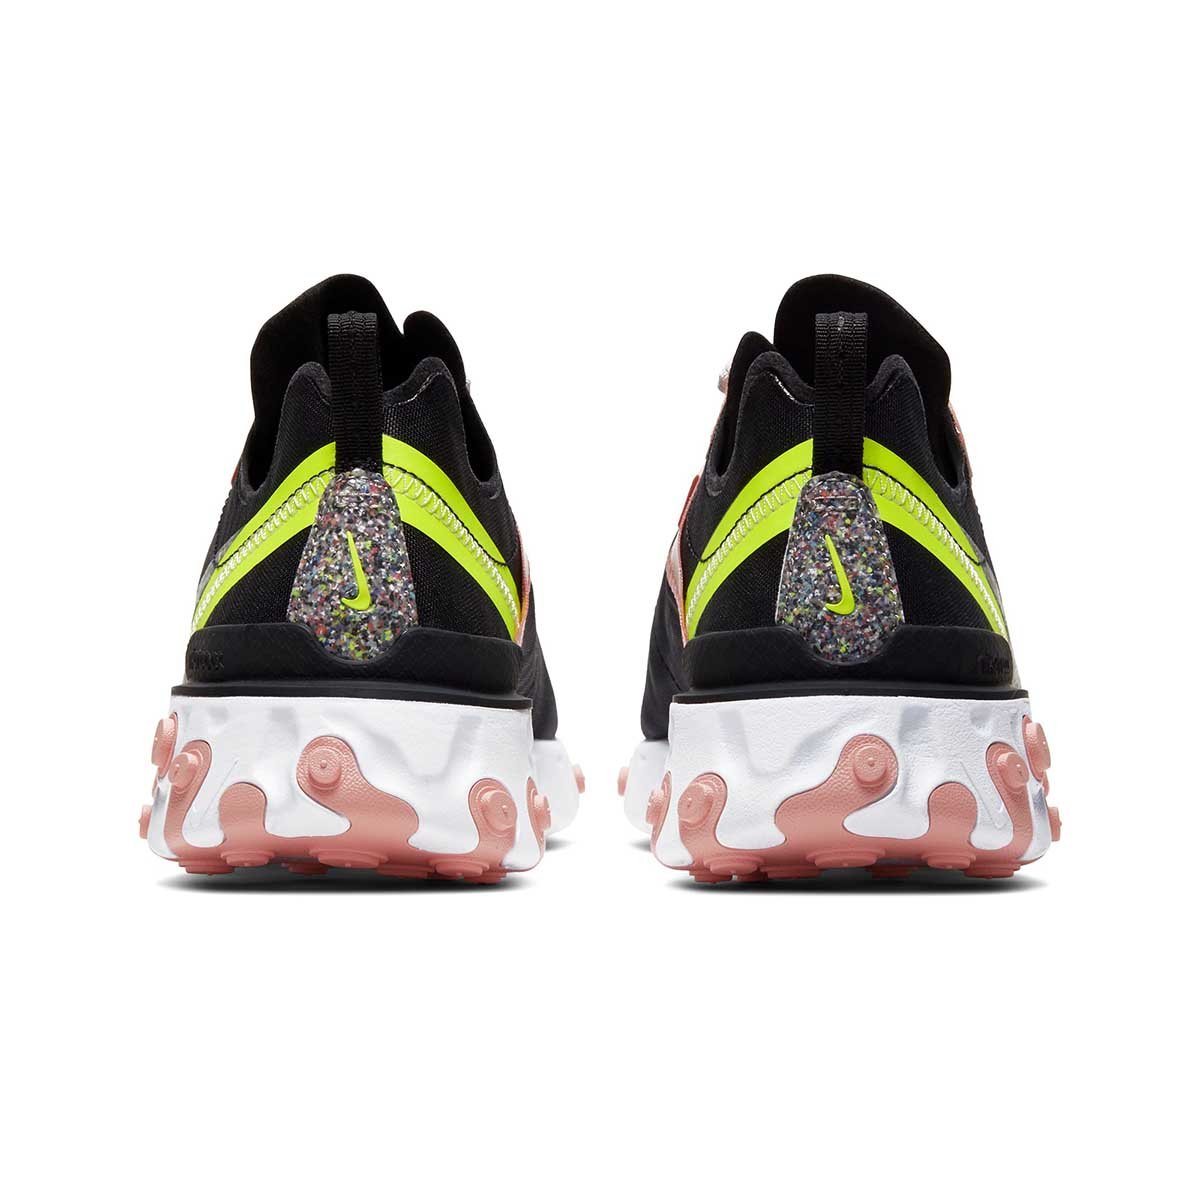 Reunir Tareas del hogar aguja Women's Nike React Element 55 Premium - Millennium Shoes